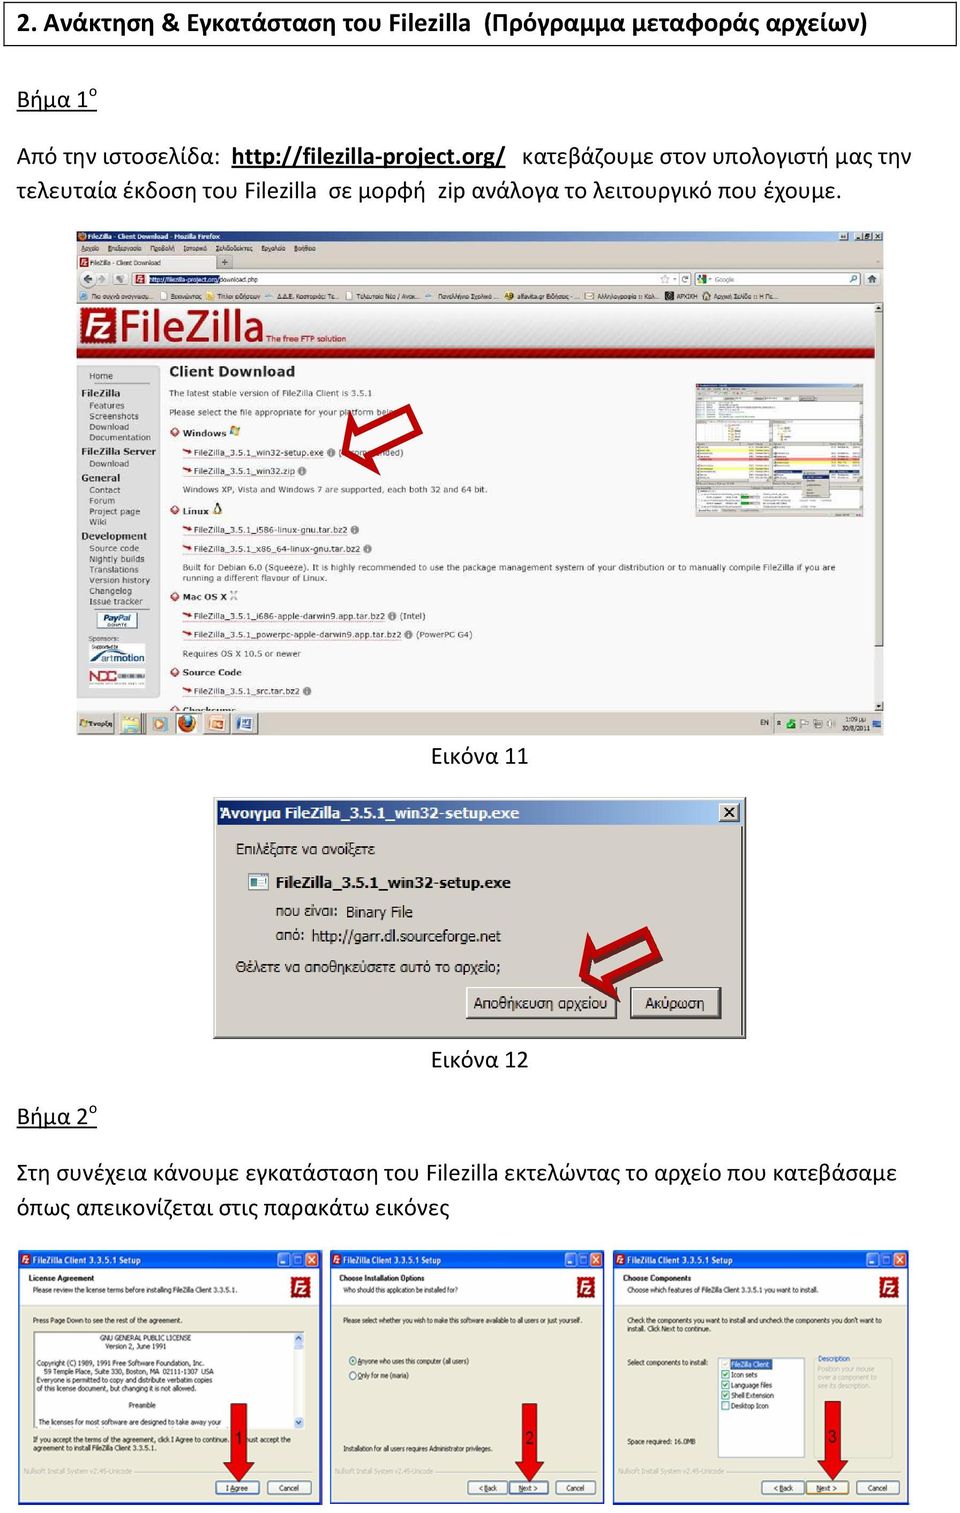 org/ κατεβάζουμε στον υπολογιστή μας την τελευταία έκδοση του Filezilla σε μορφή zip ανάλογα το